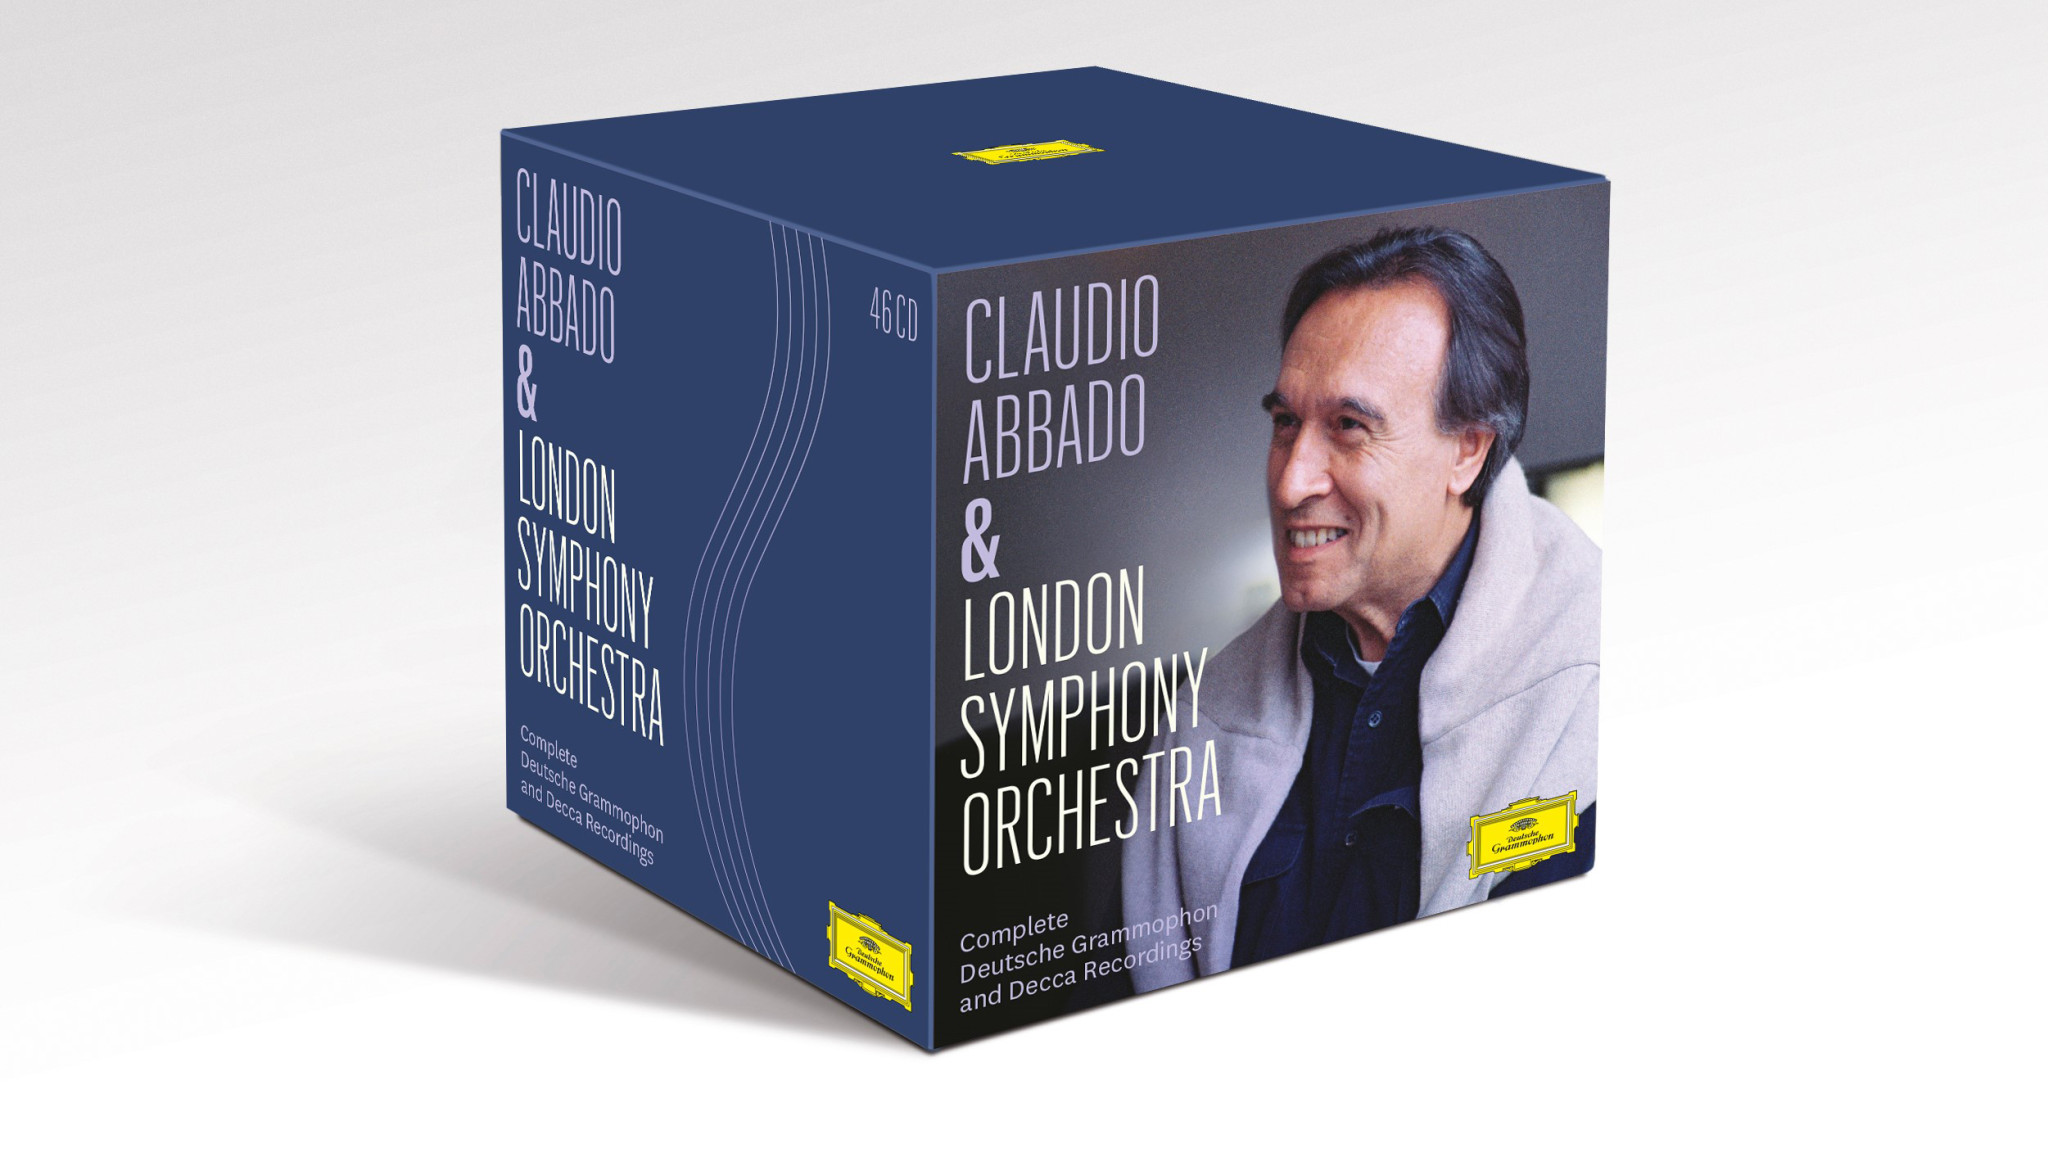 Claudio Abbado and the London Symphony Orchestra - Complete Recordings on Deutsche Grammophon & Decca